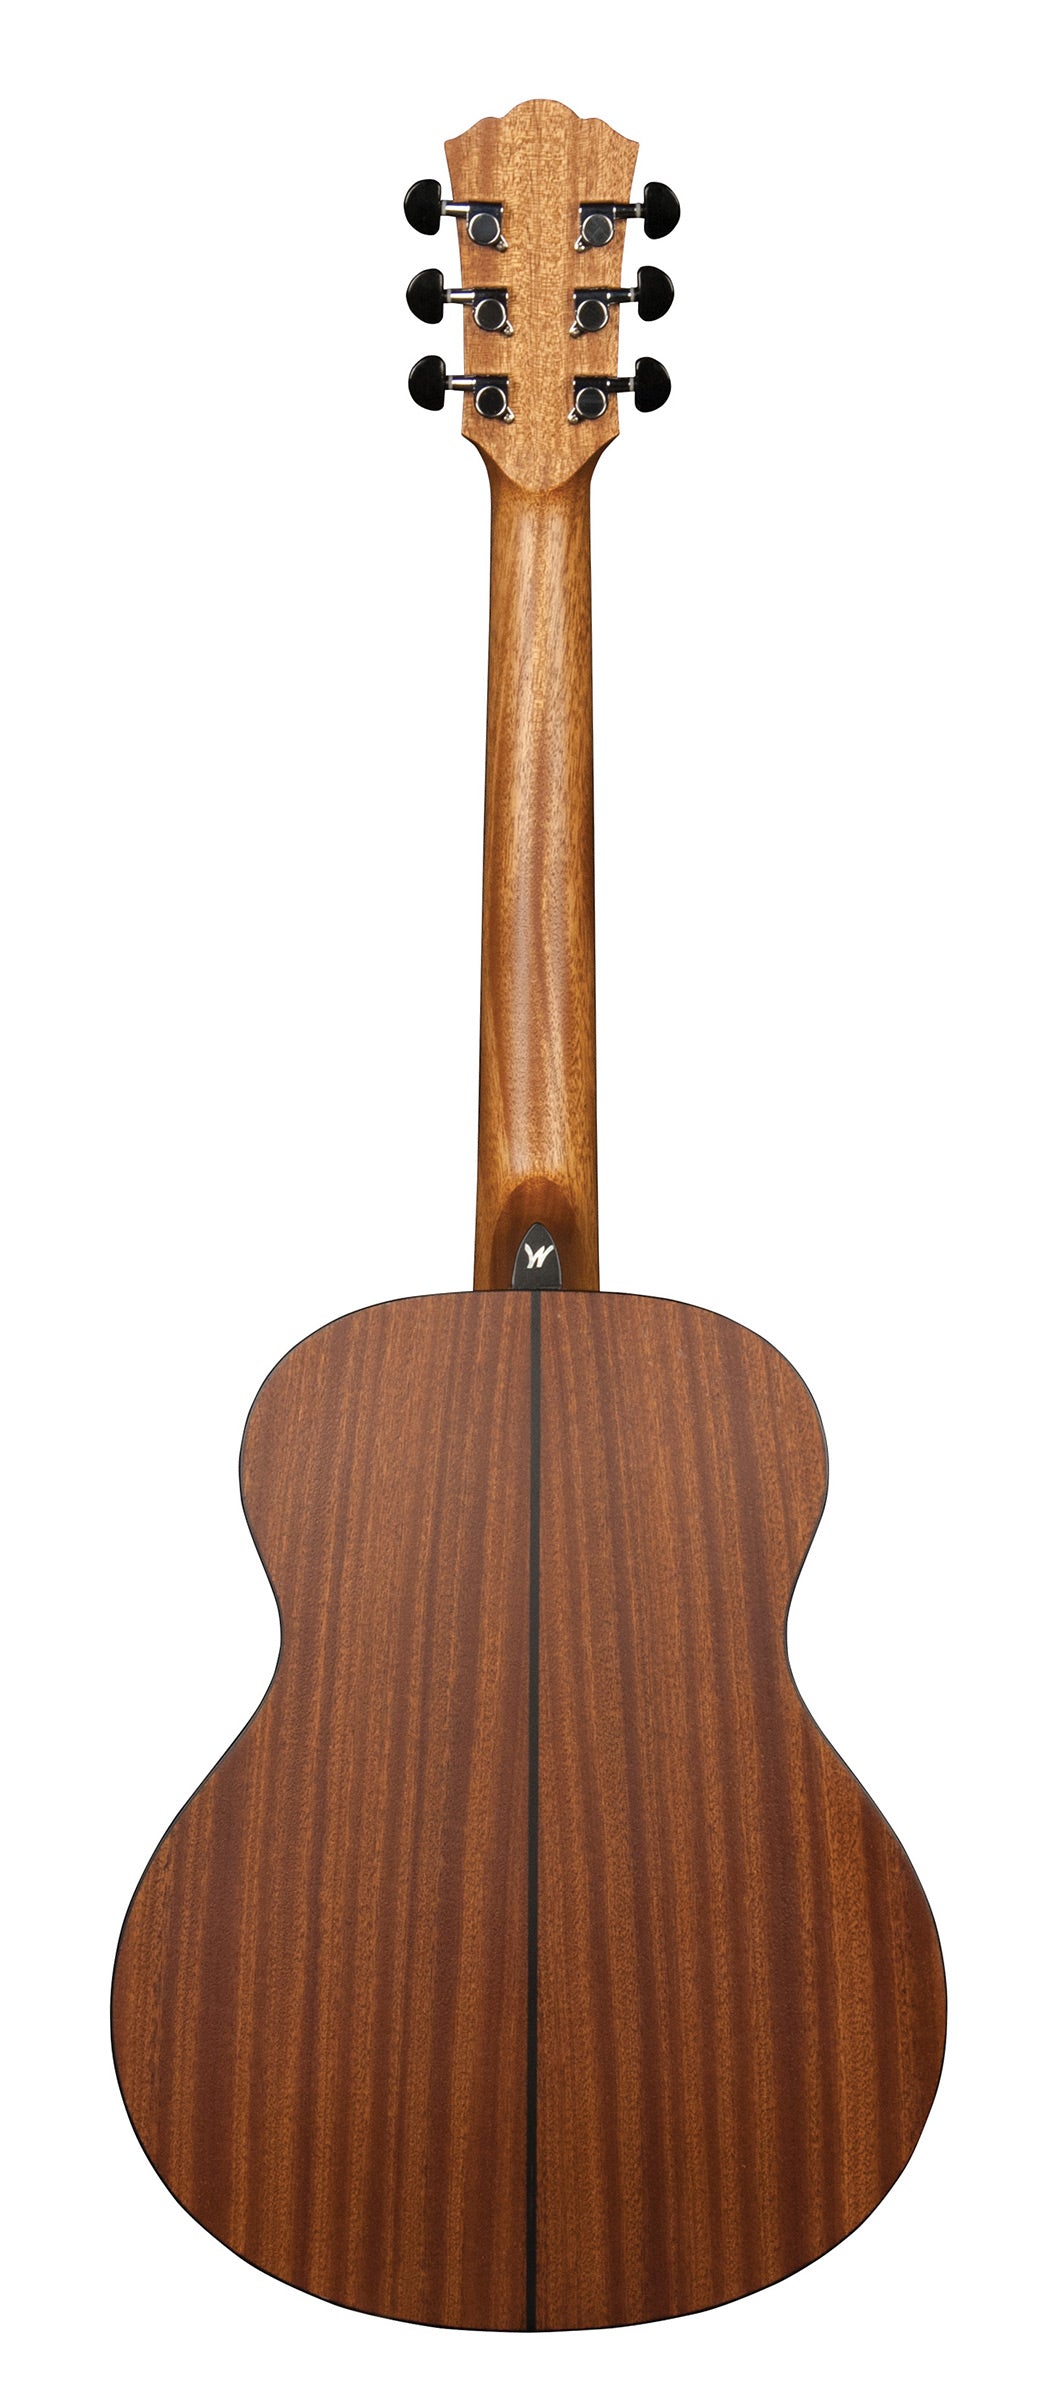 Washburn G-Mini 5 Apprentice Series 7/8 Size Acoustic Guitar. Natural